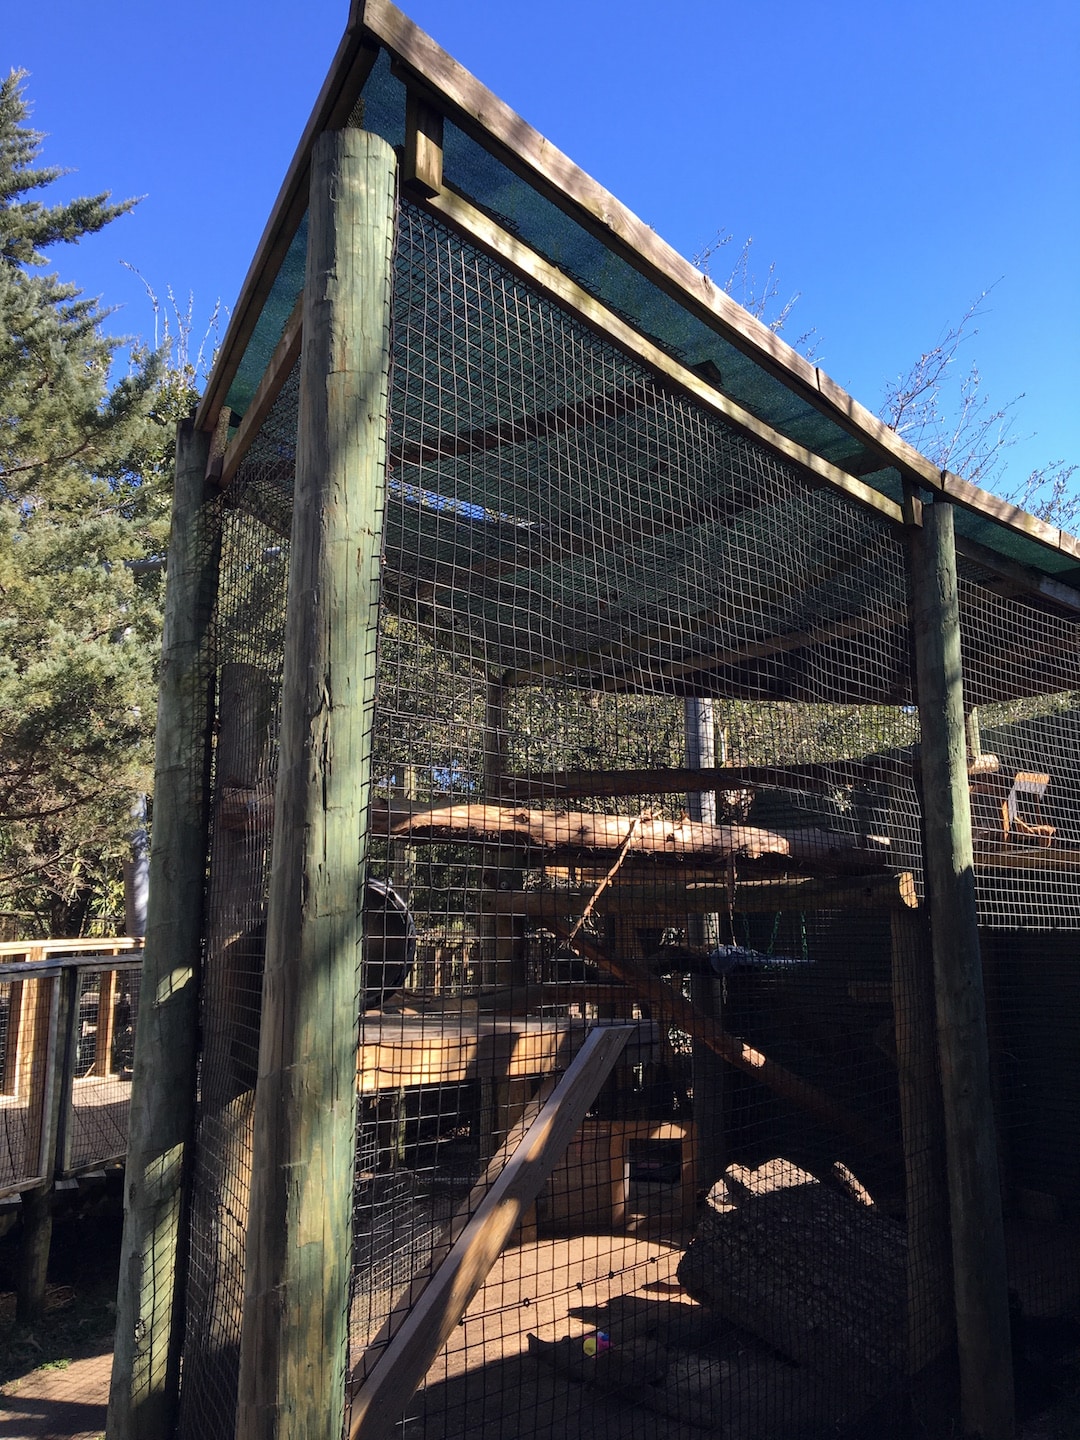 houston zoo wire mesh cage